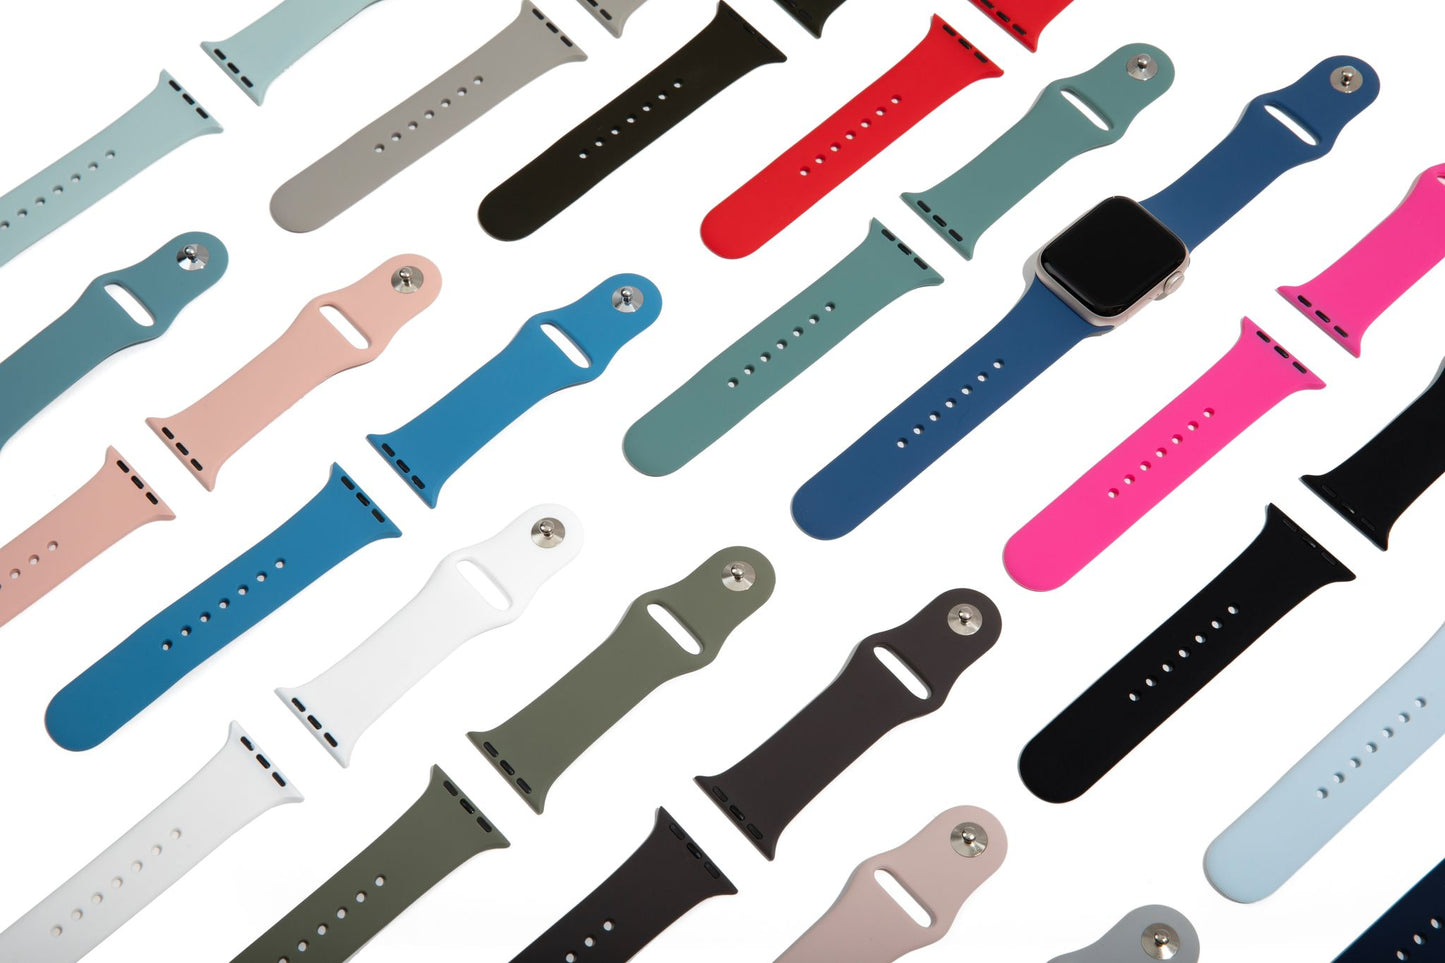 Denim Blue Watch Band for Apple Watch by Joybands - Sleek & Versatile